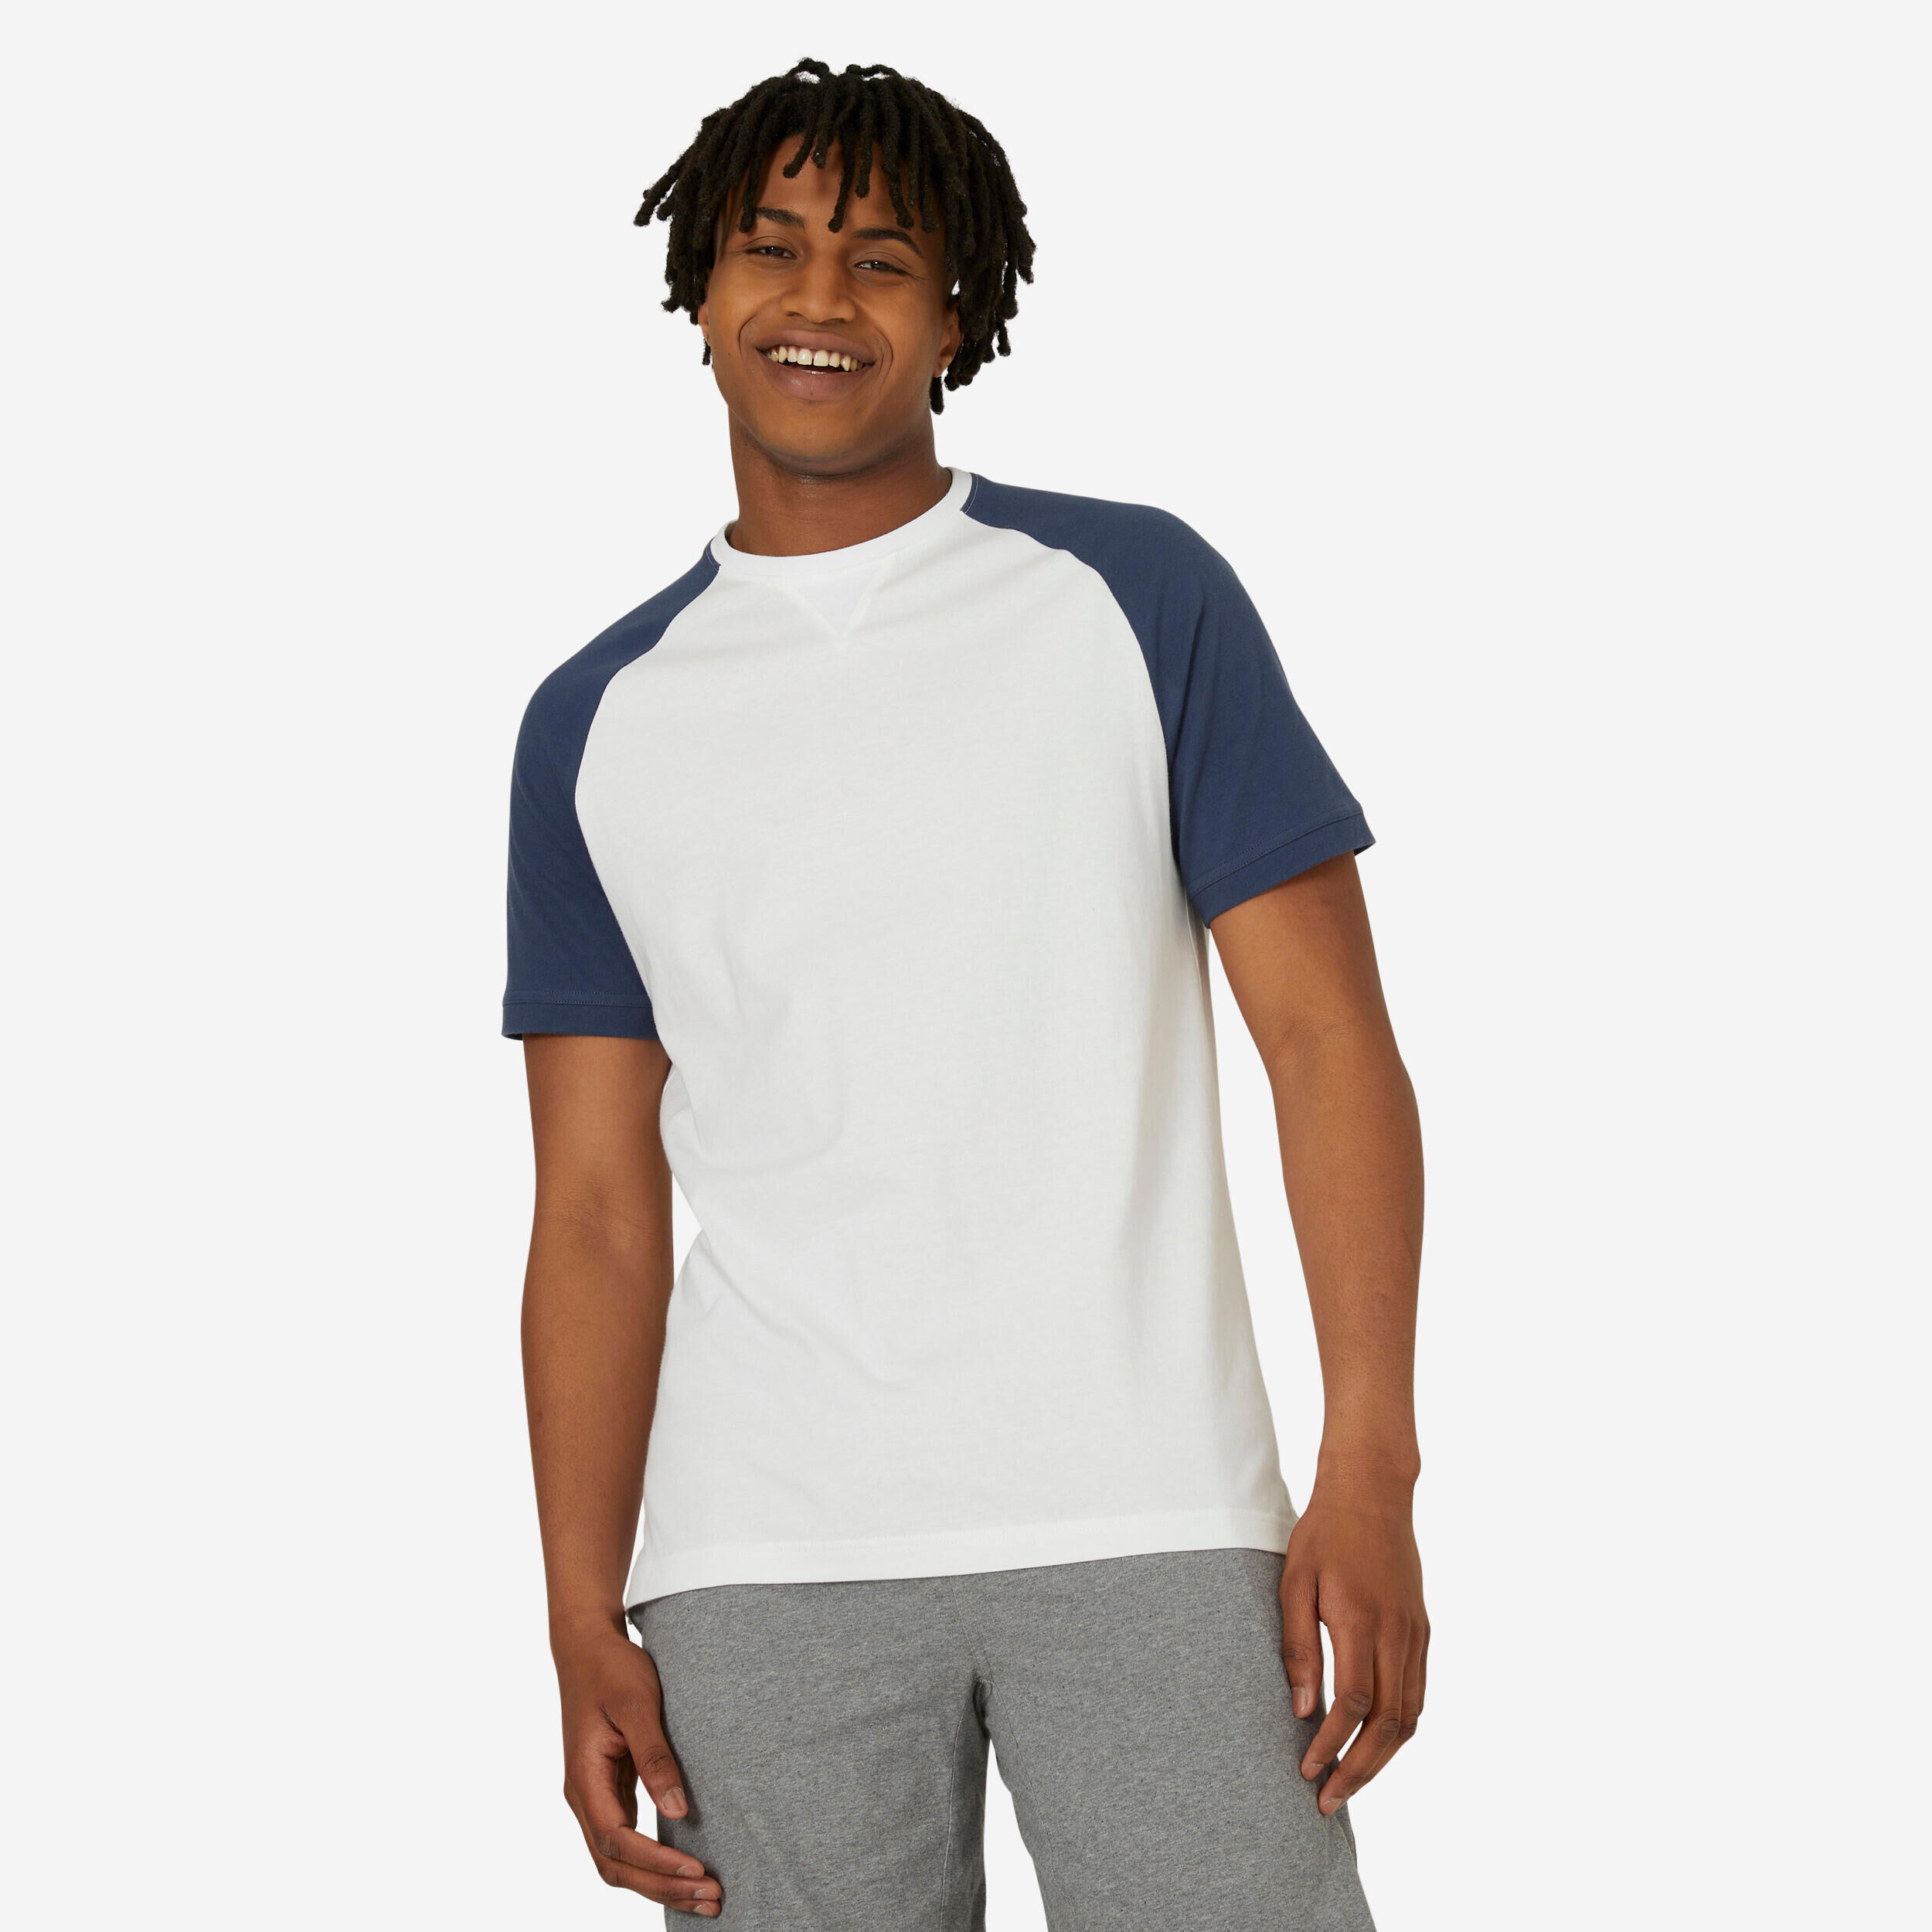 Electric Red & Navy Blue Sports T-Shirt | Men's Activewear & Sportswear